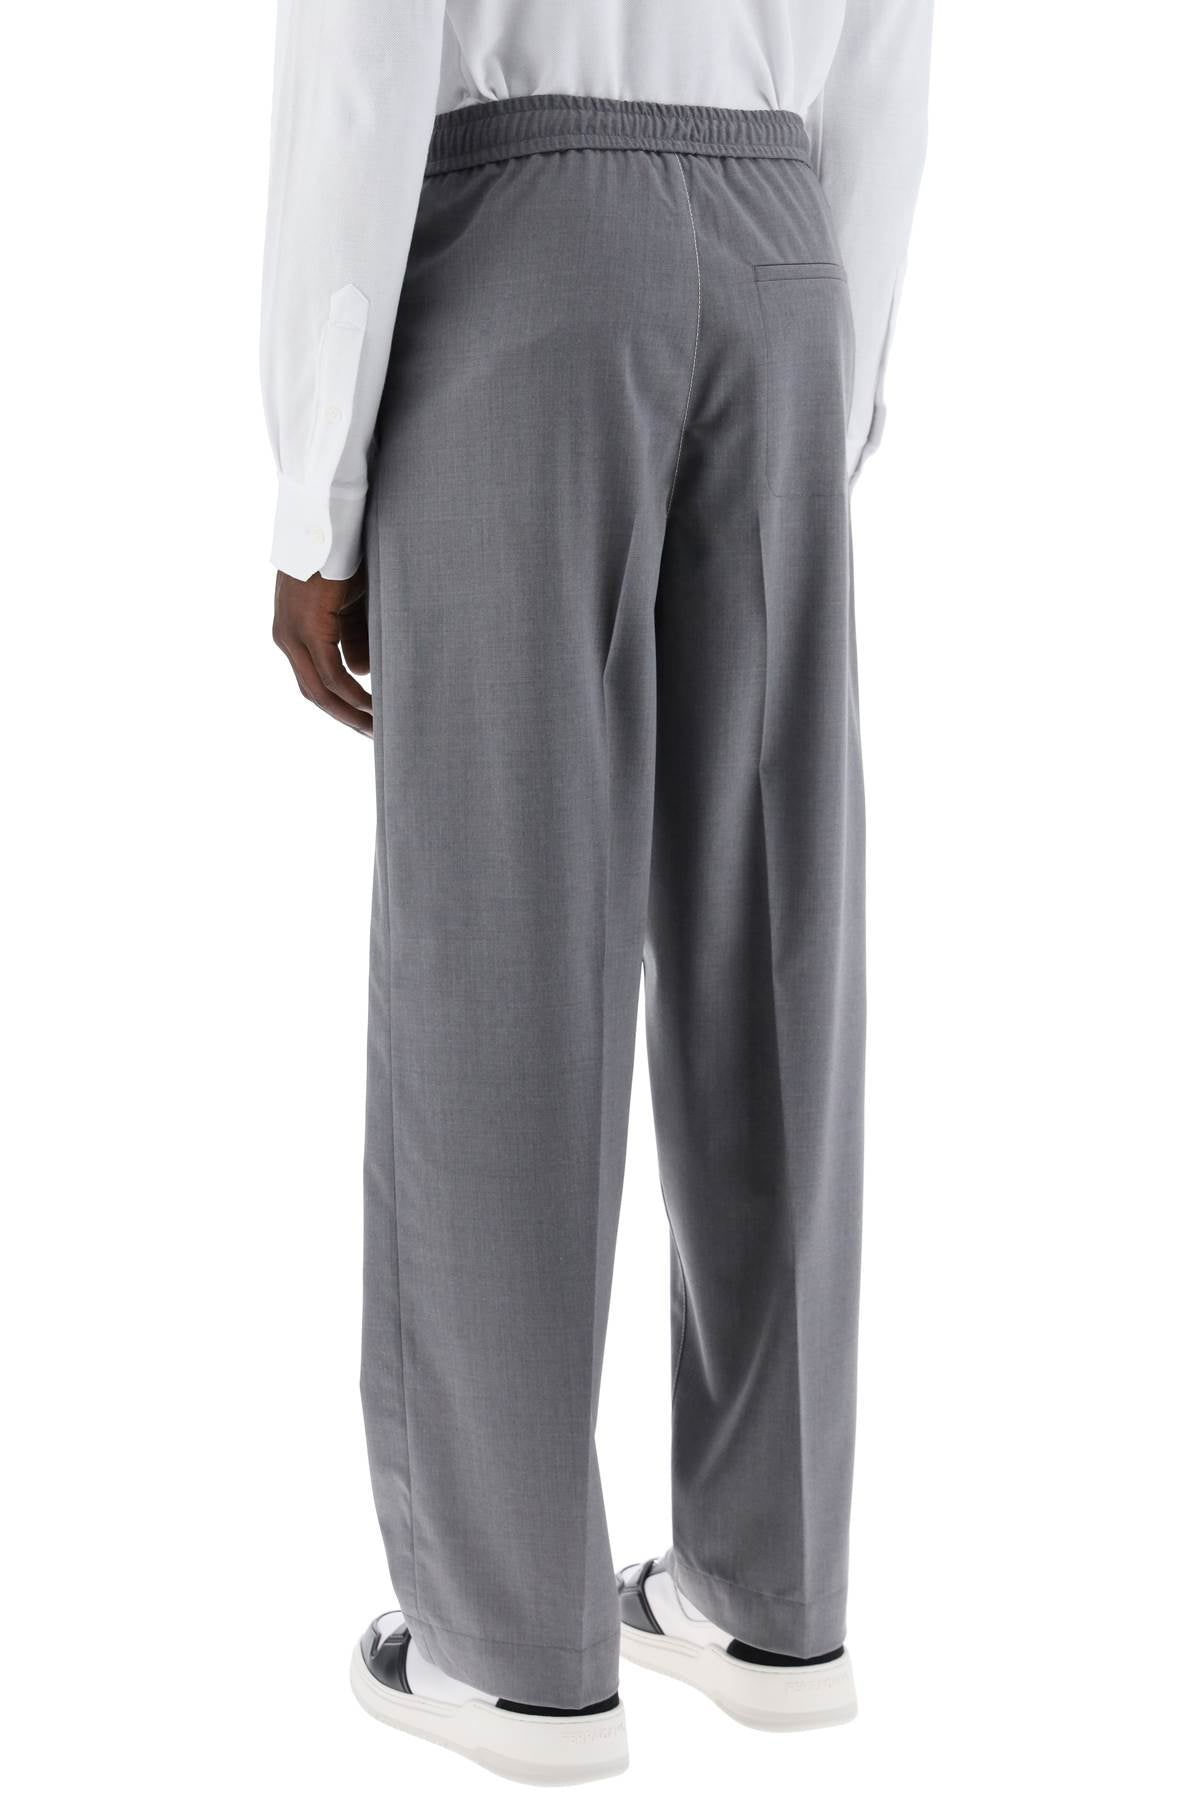 FERRAGAMO Men's Lightweight Wool Tailored Trousers in Canvas Fabric - FW24